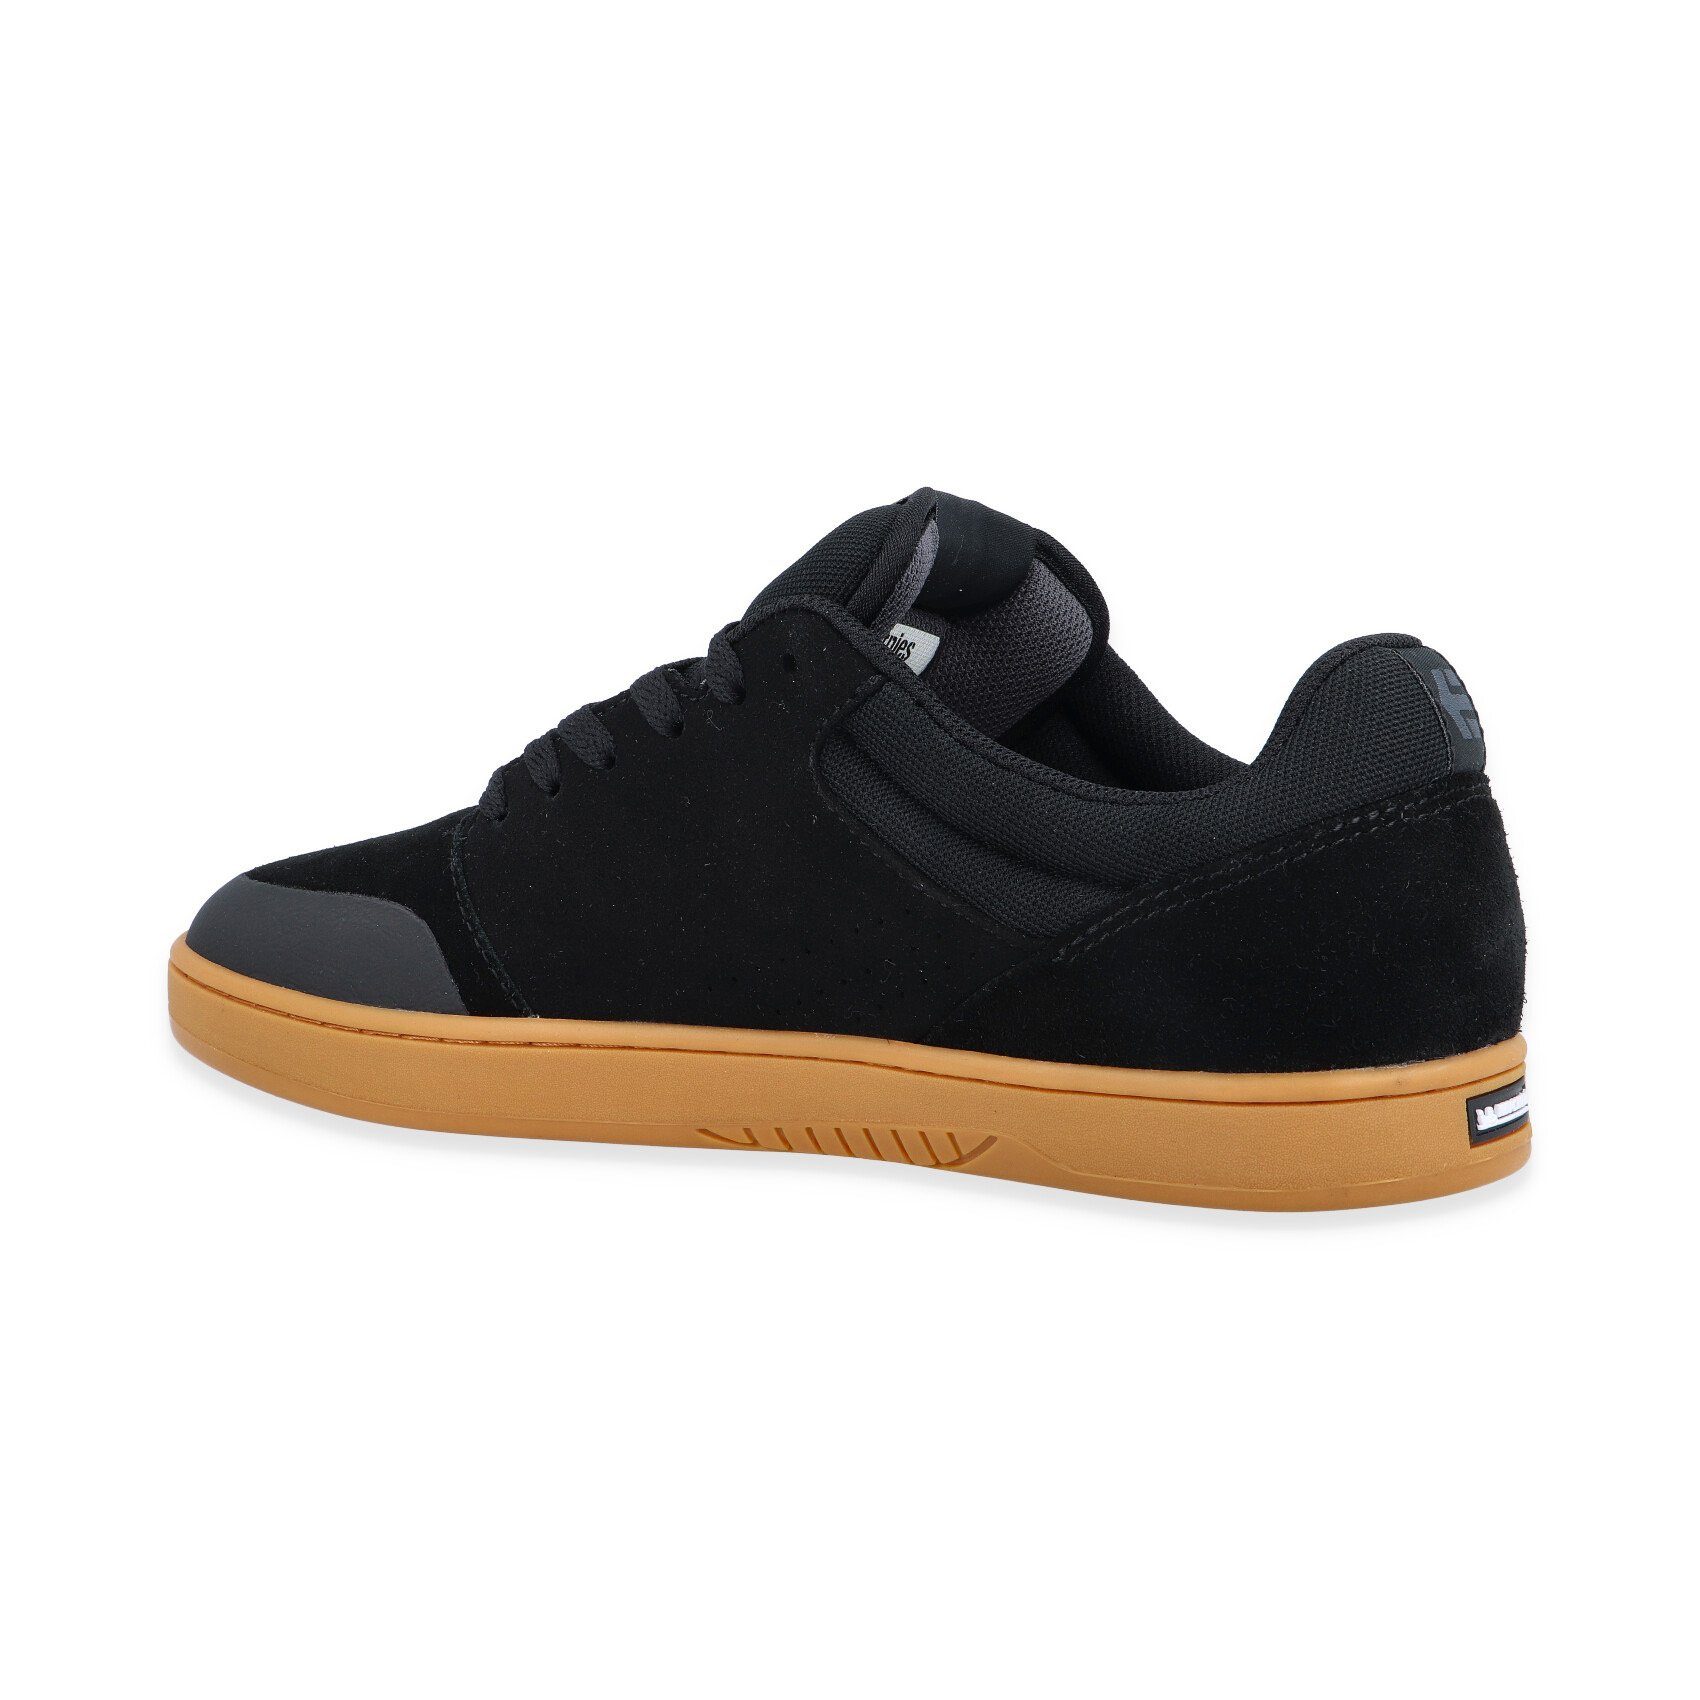 grey/gum - black/dark etnies Marana Sneaker